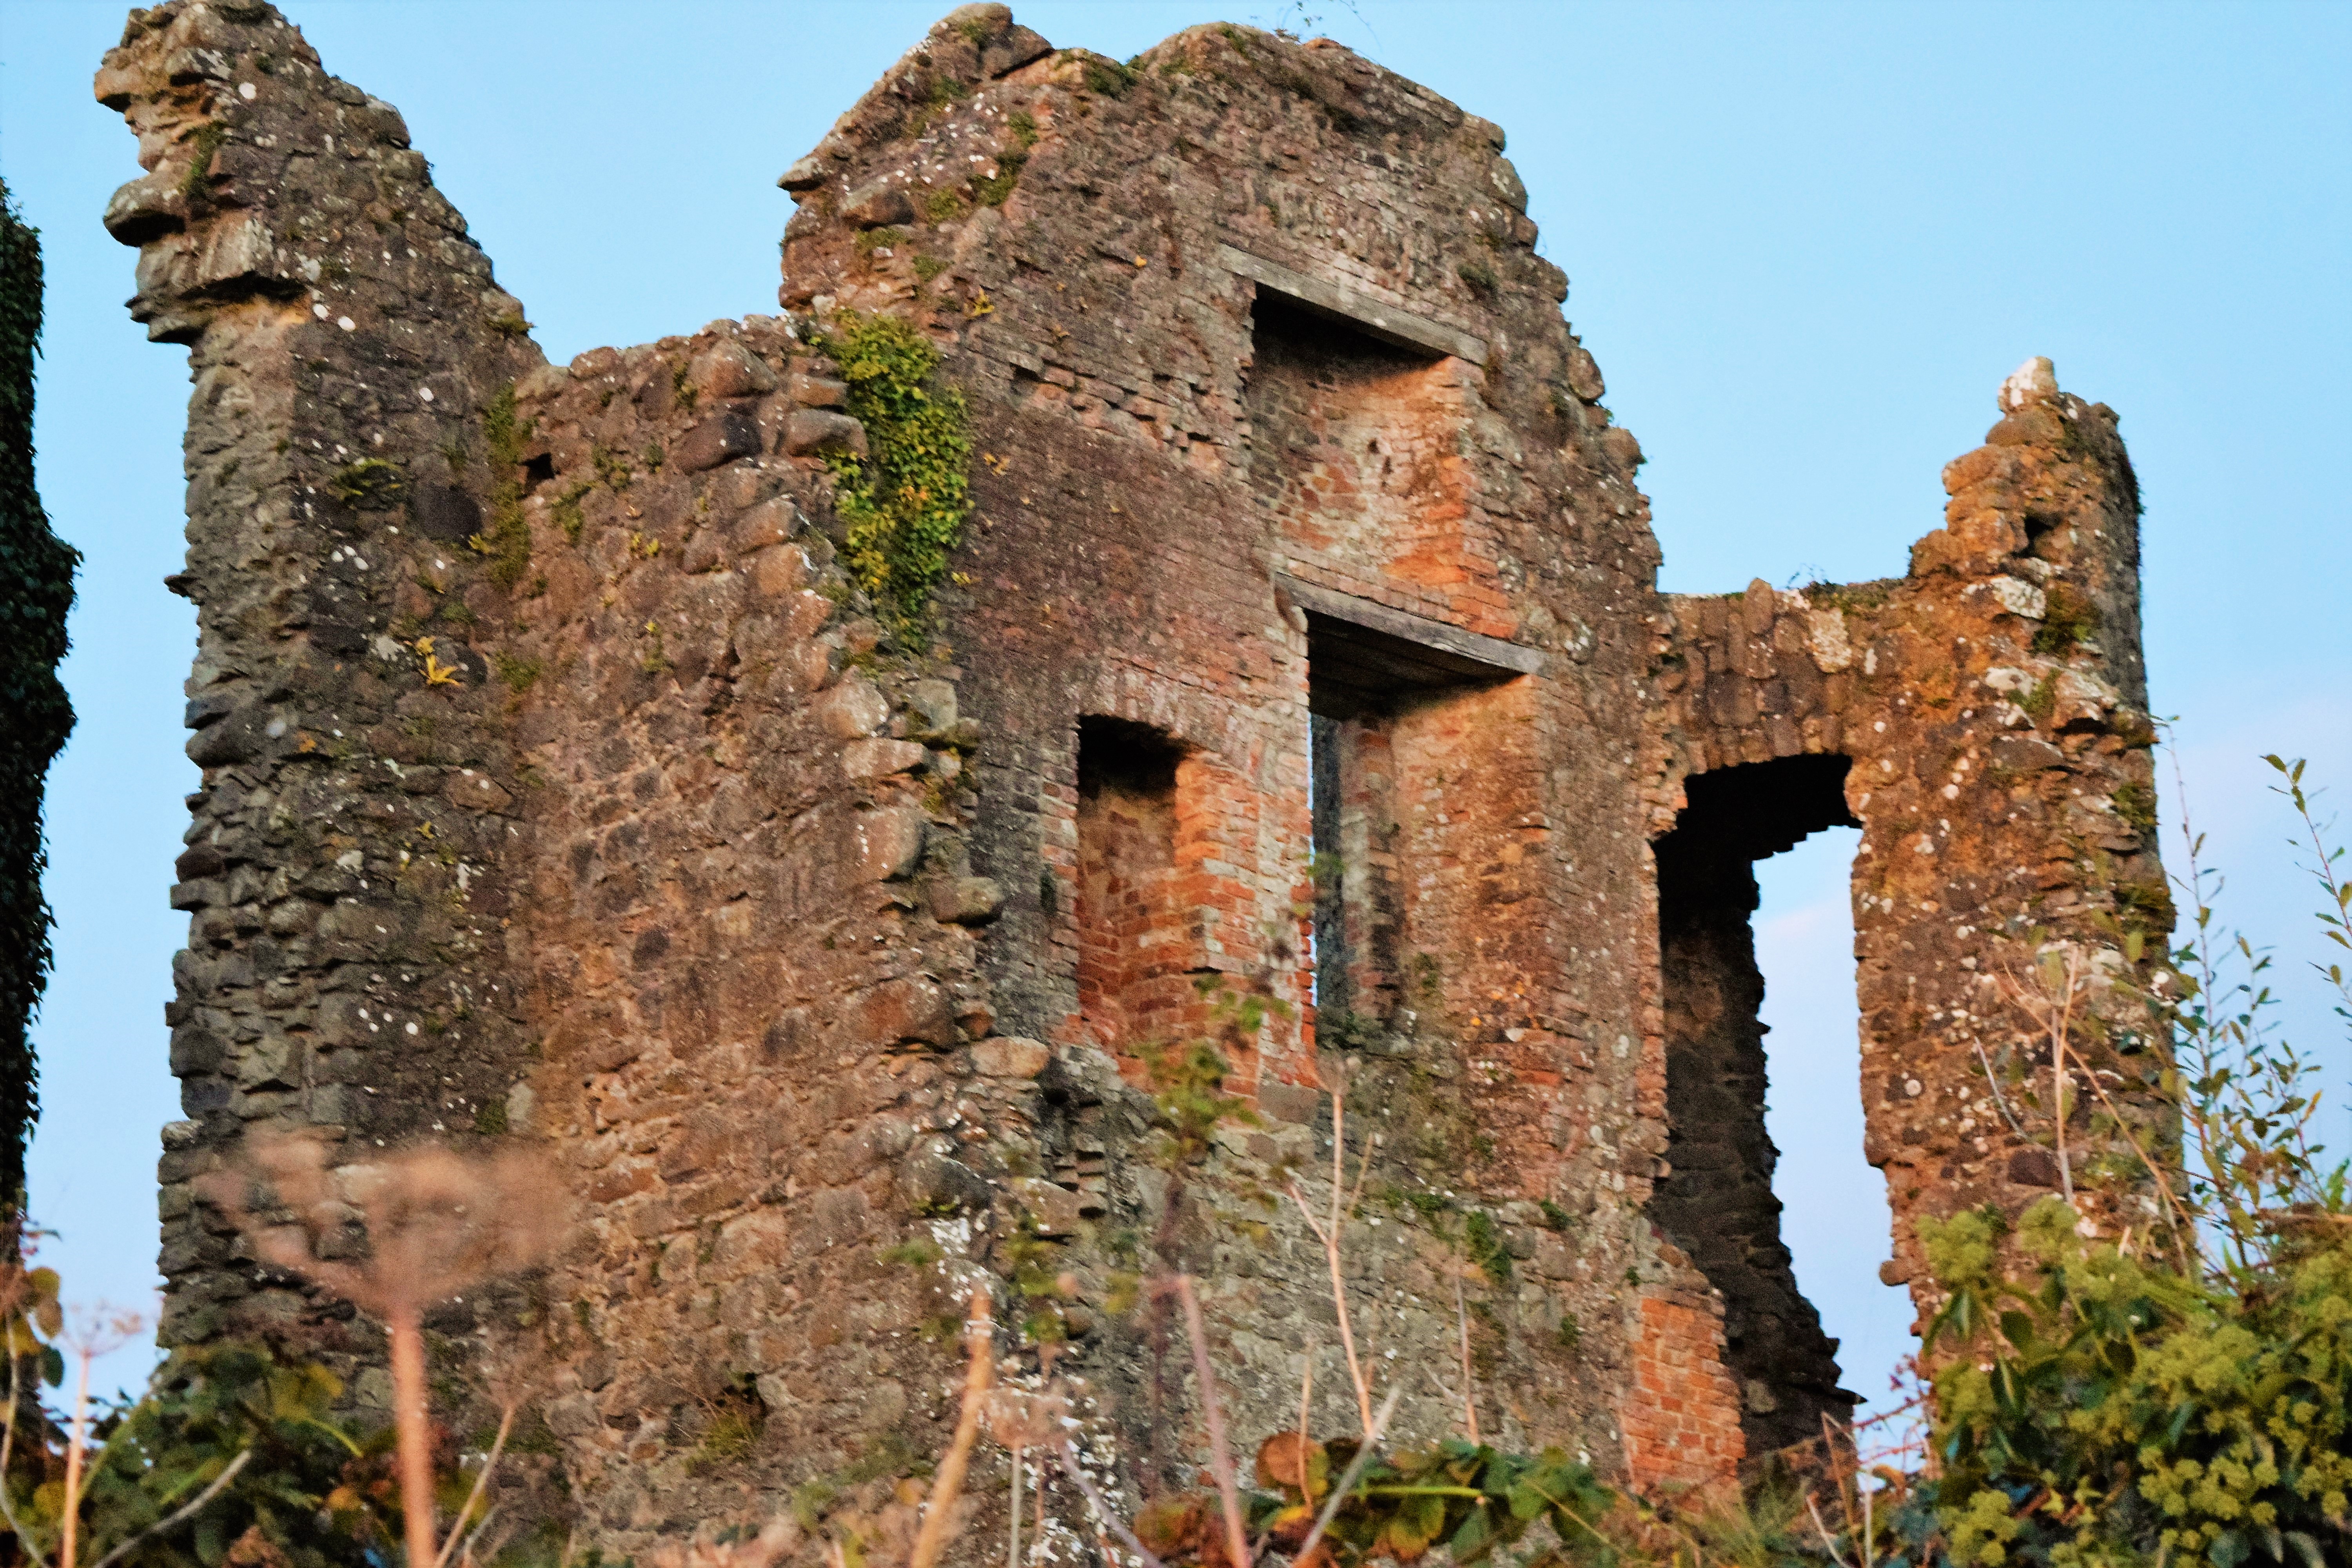 Crom Castle in ruins